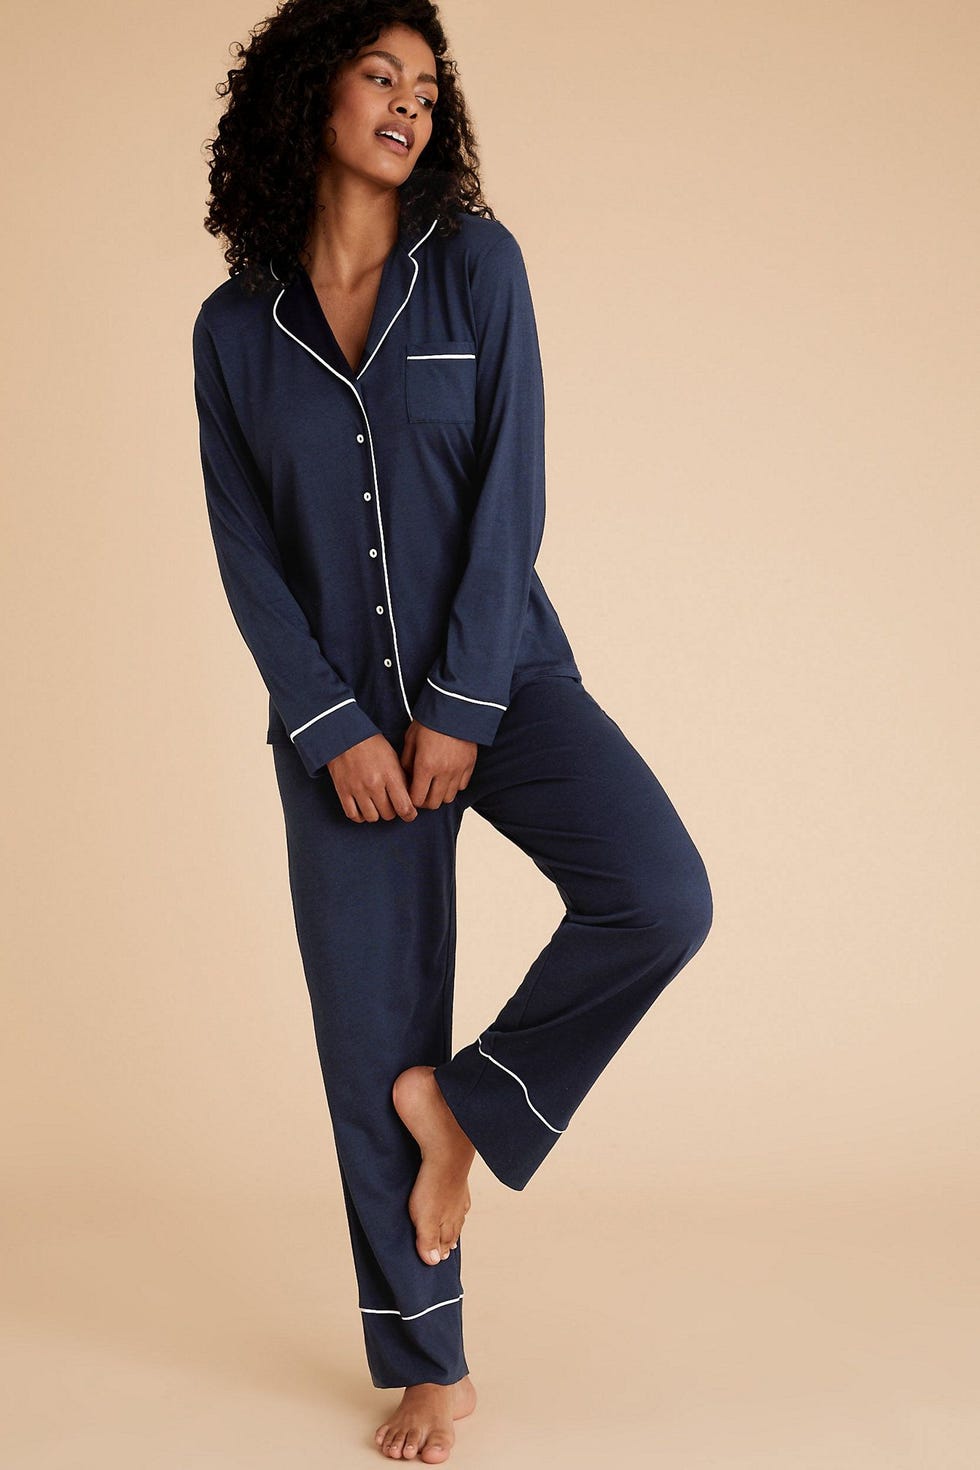 Cotton Modal Pyjama Set, £30